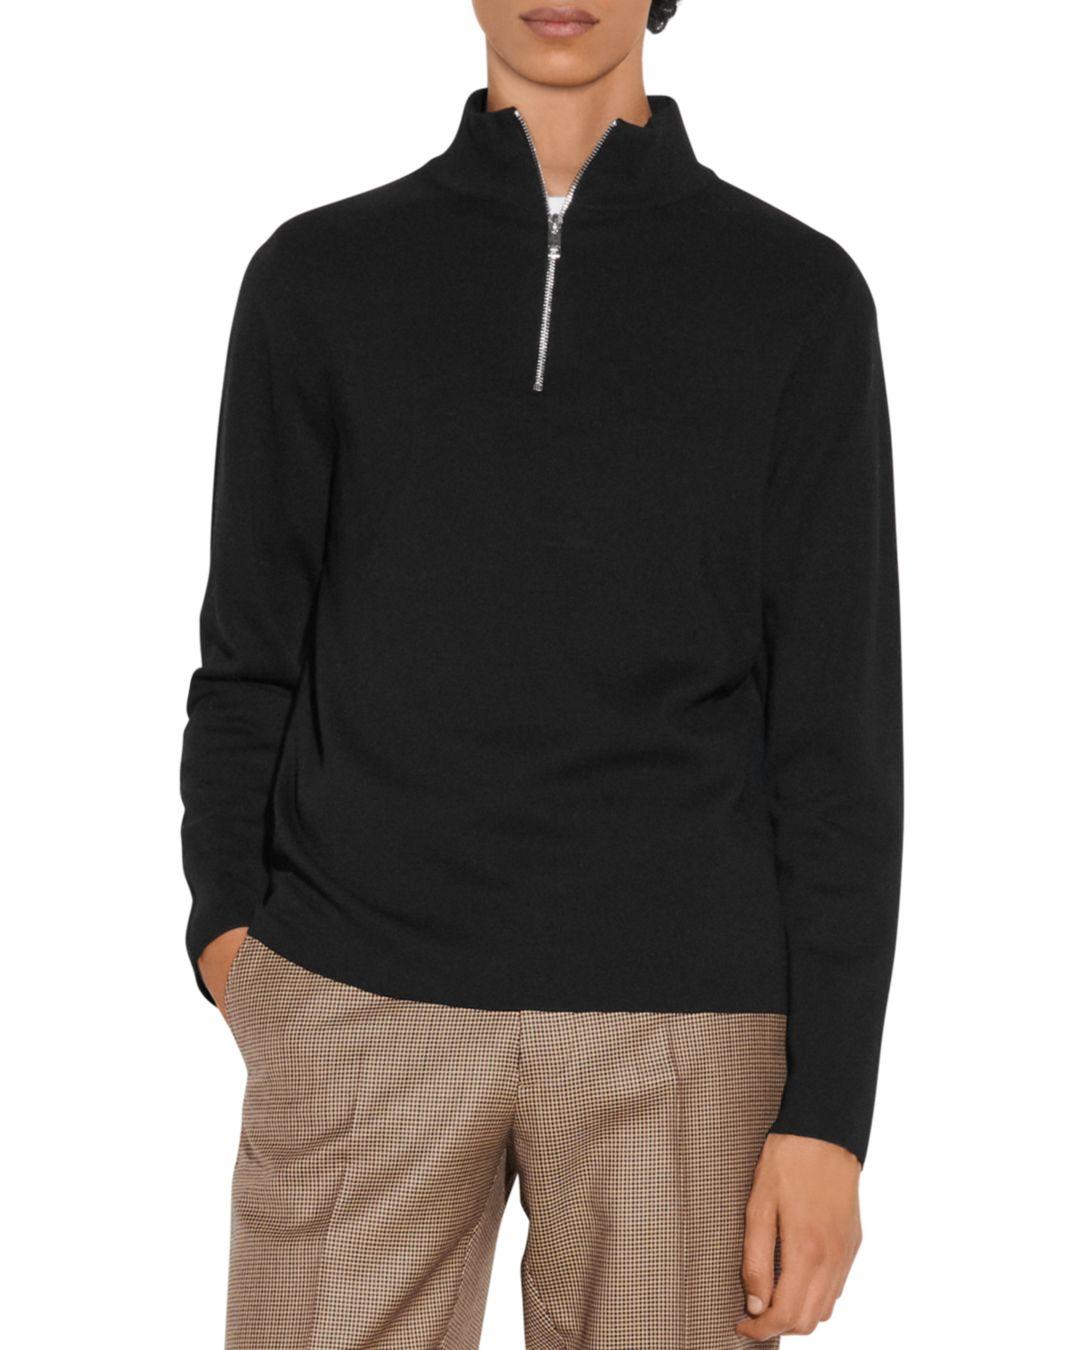 Sandro Wool Half Zip Sweater in Black for Men - Lyst